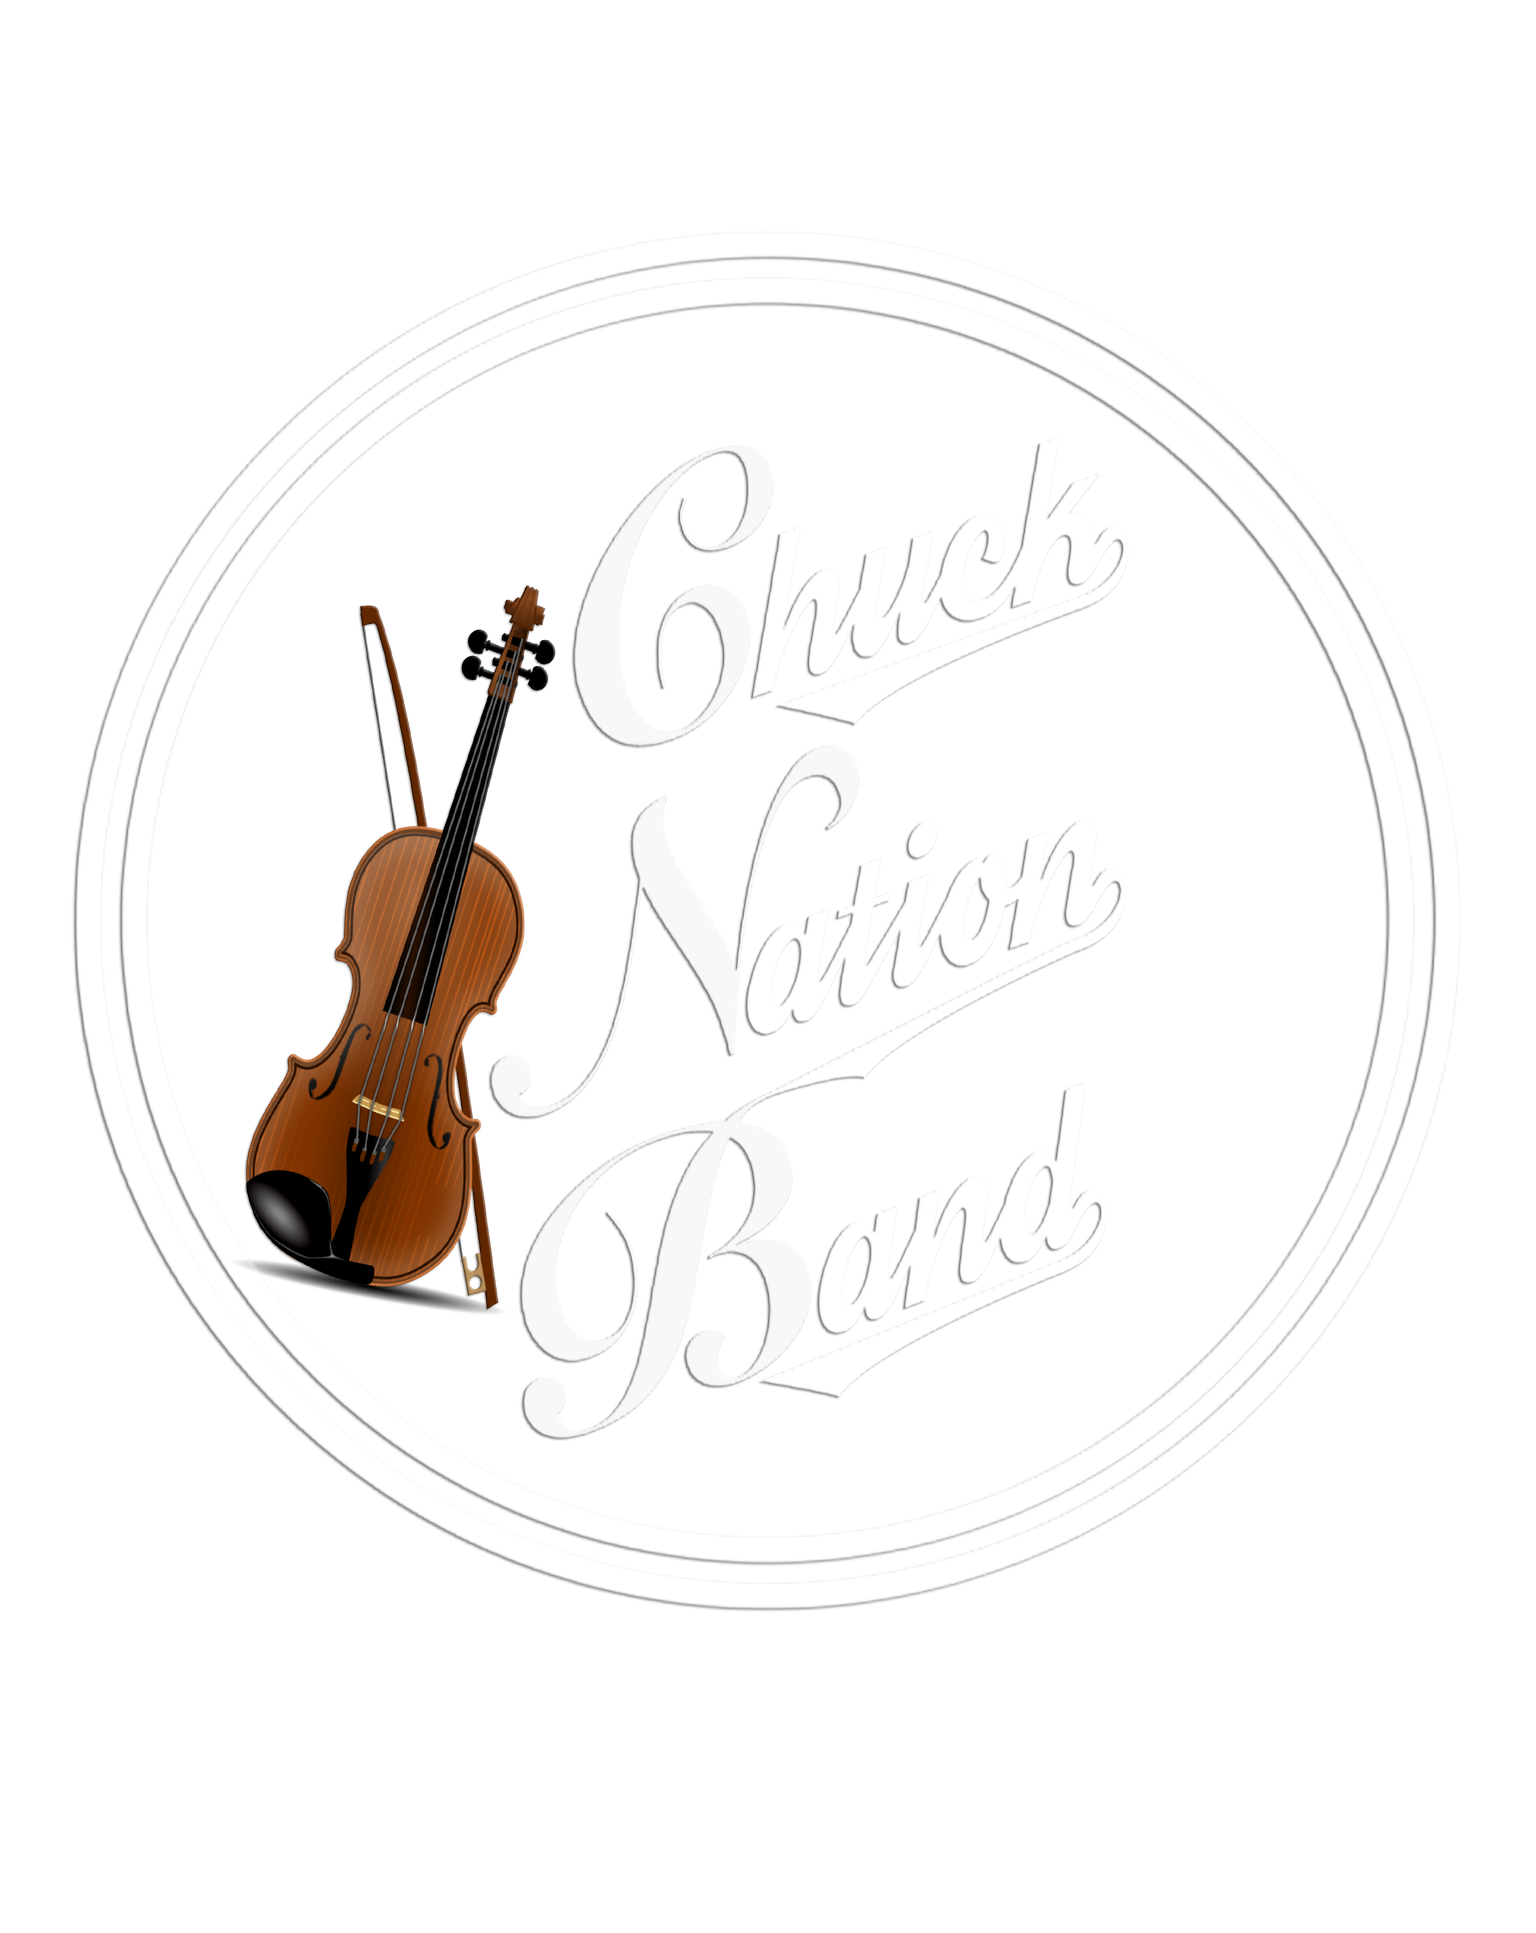 Chuck Nation Band